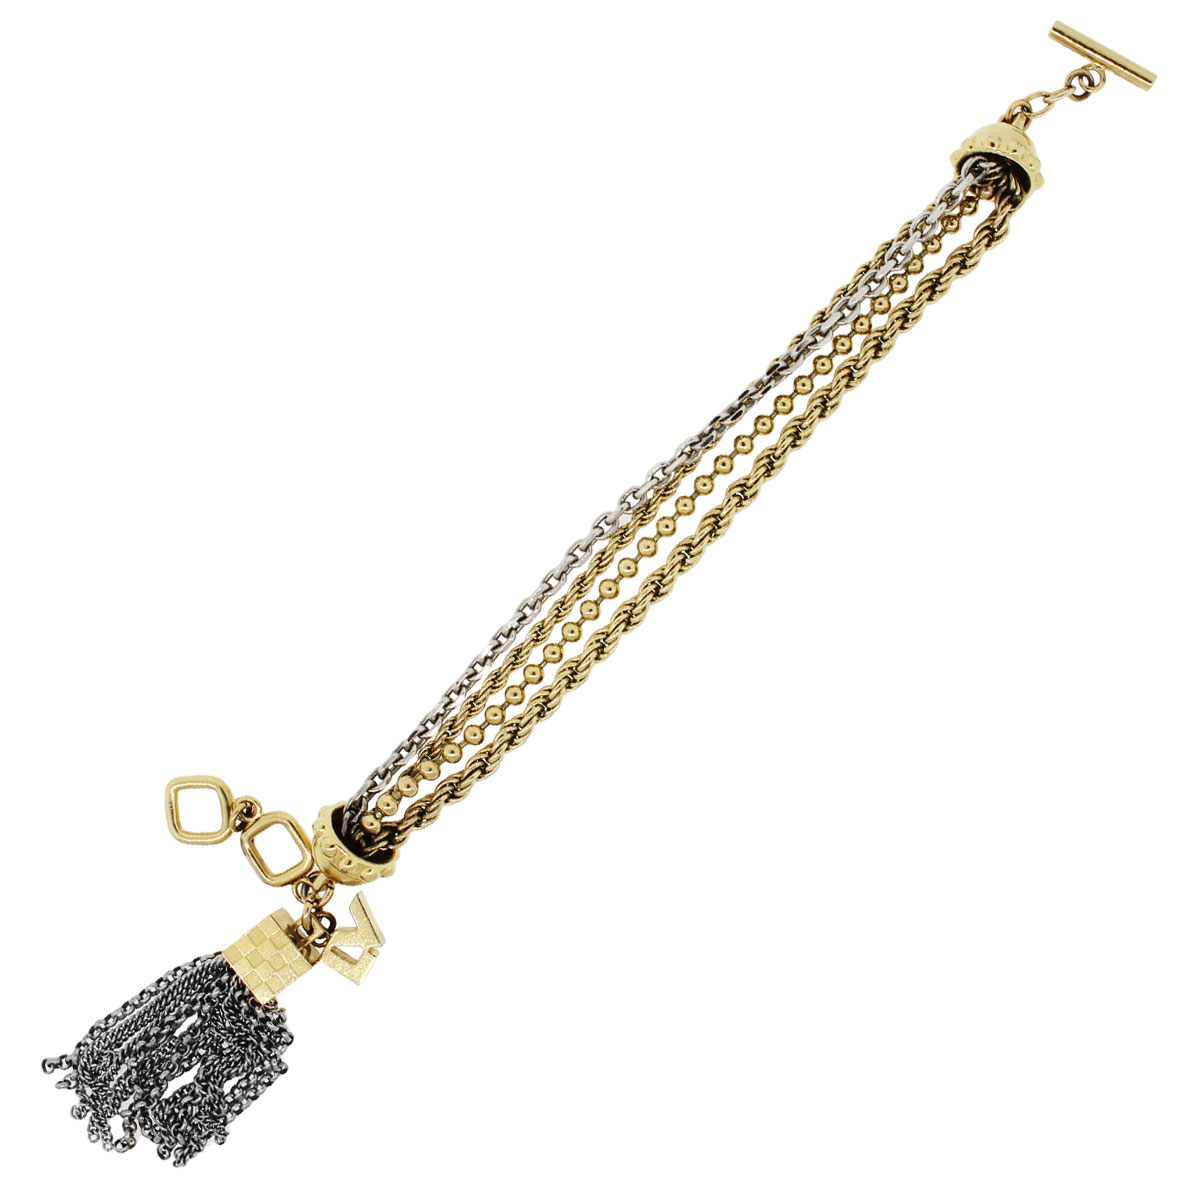 Louis Vuitton Two-strand leather bracelet choker bangle gold